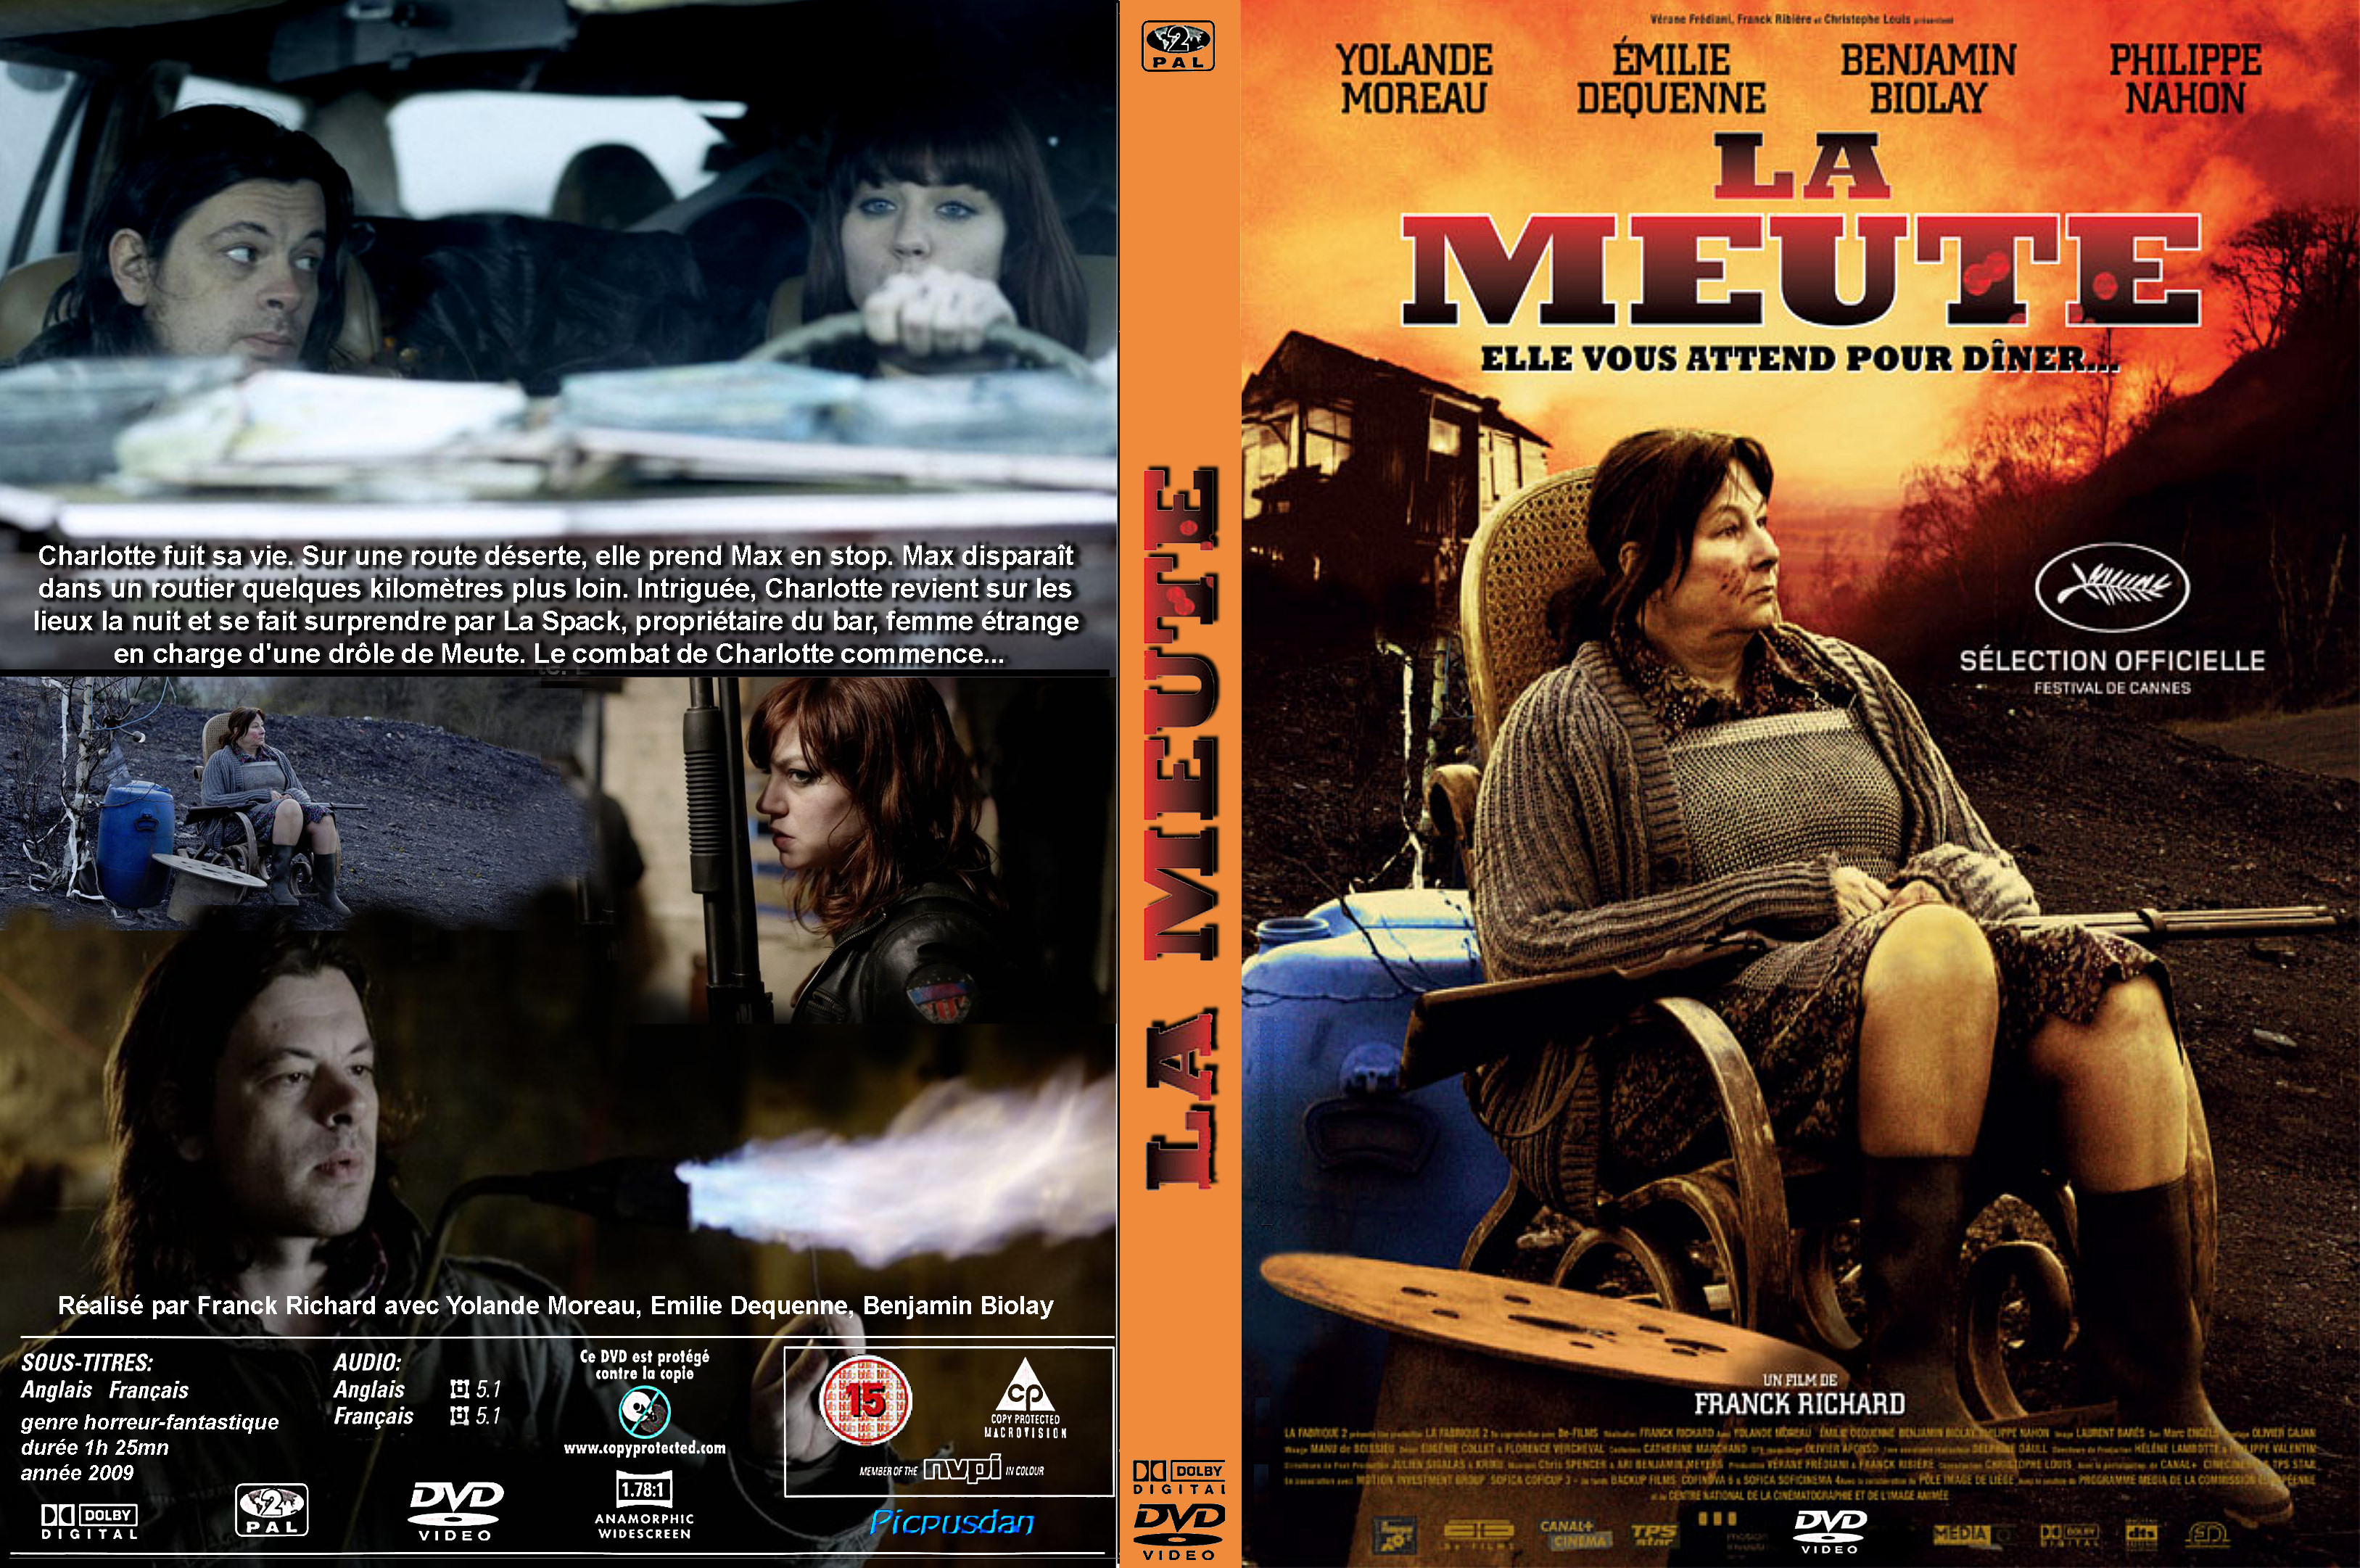 Jaquette DVD La meute (2011) custom